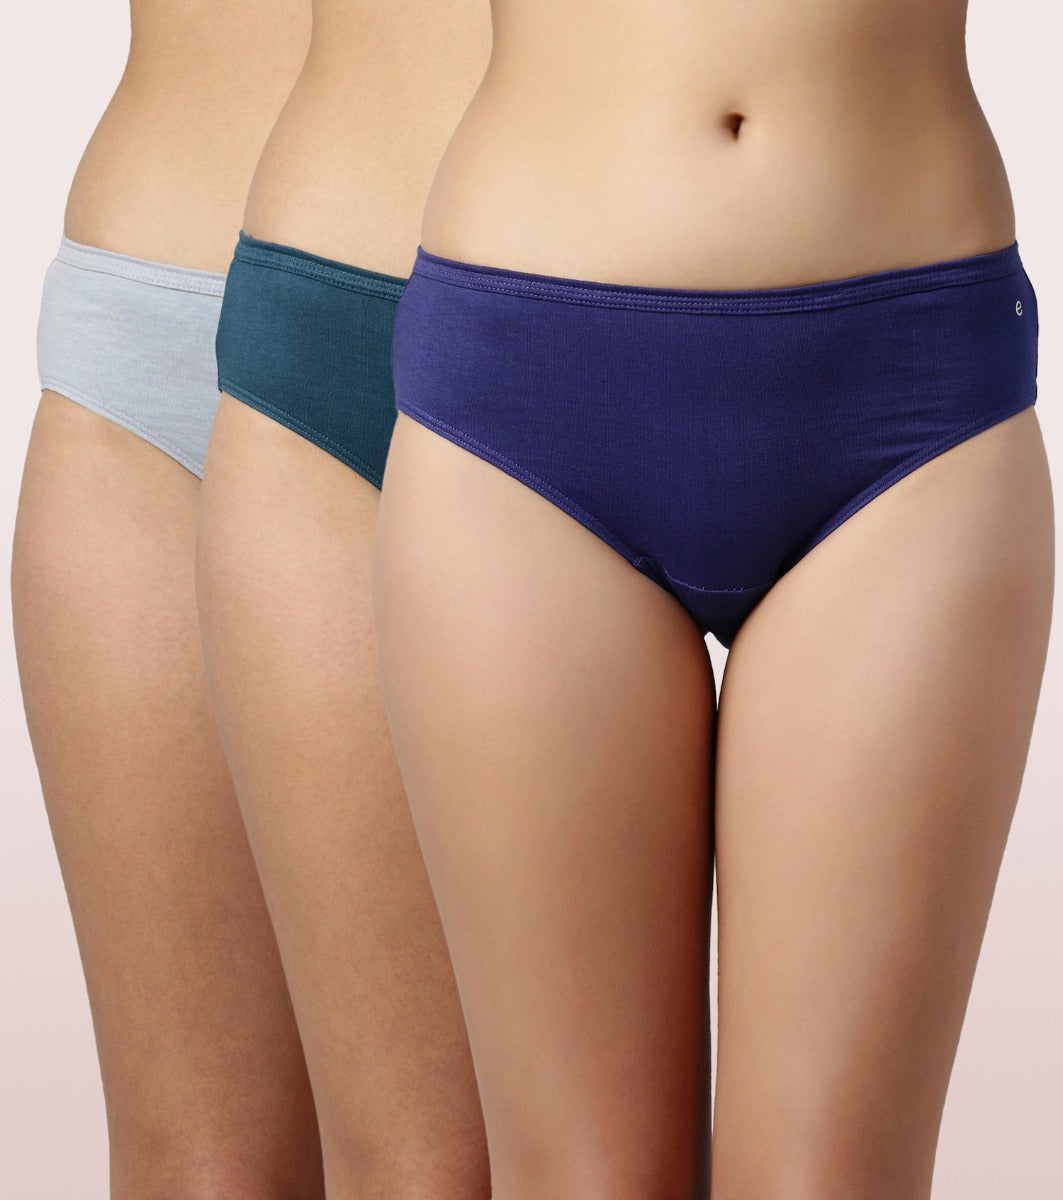 Buy Multicoloured Panties for Women by AANYOR Online